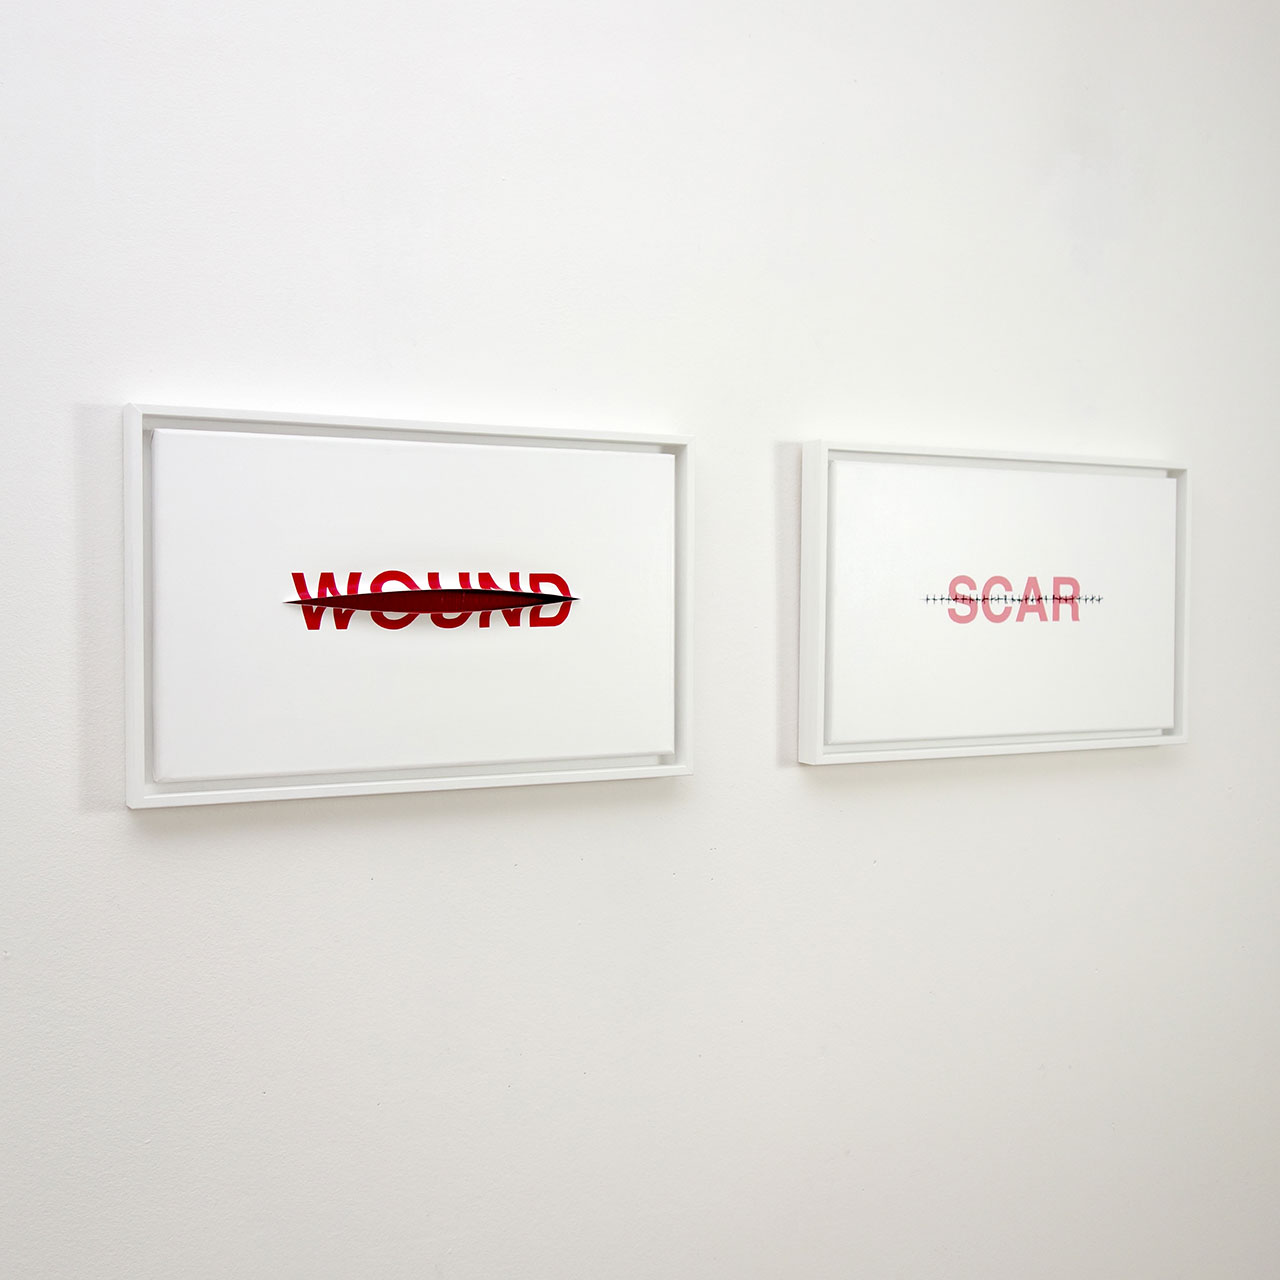 Anatol Knotek, (from left to right) wound, 30 cm x 50 cm, acrylic on canvas, sliced (framed). scar, 30 cm x 50 cm, acrylic on canvas, sliced, stitched (framed) © 2014.